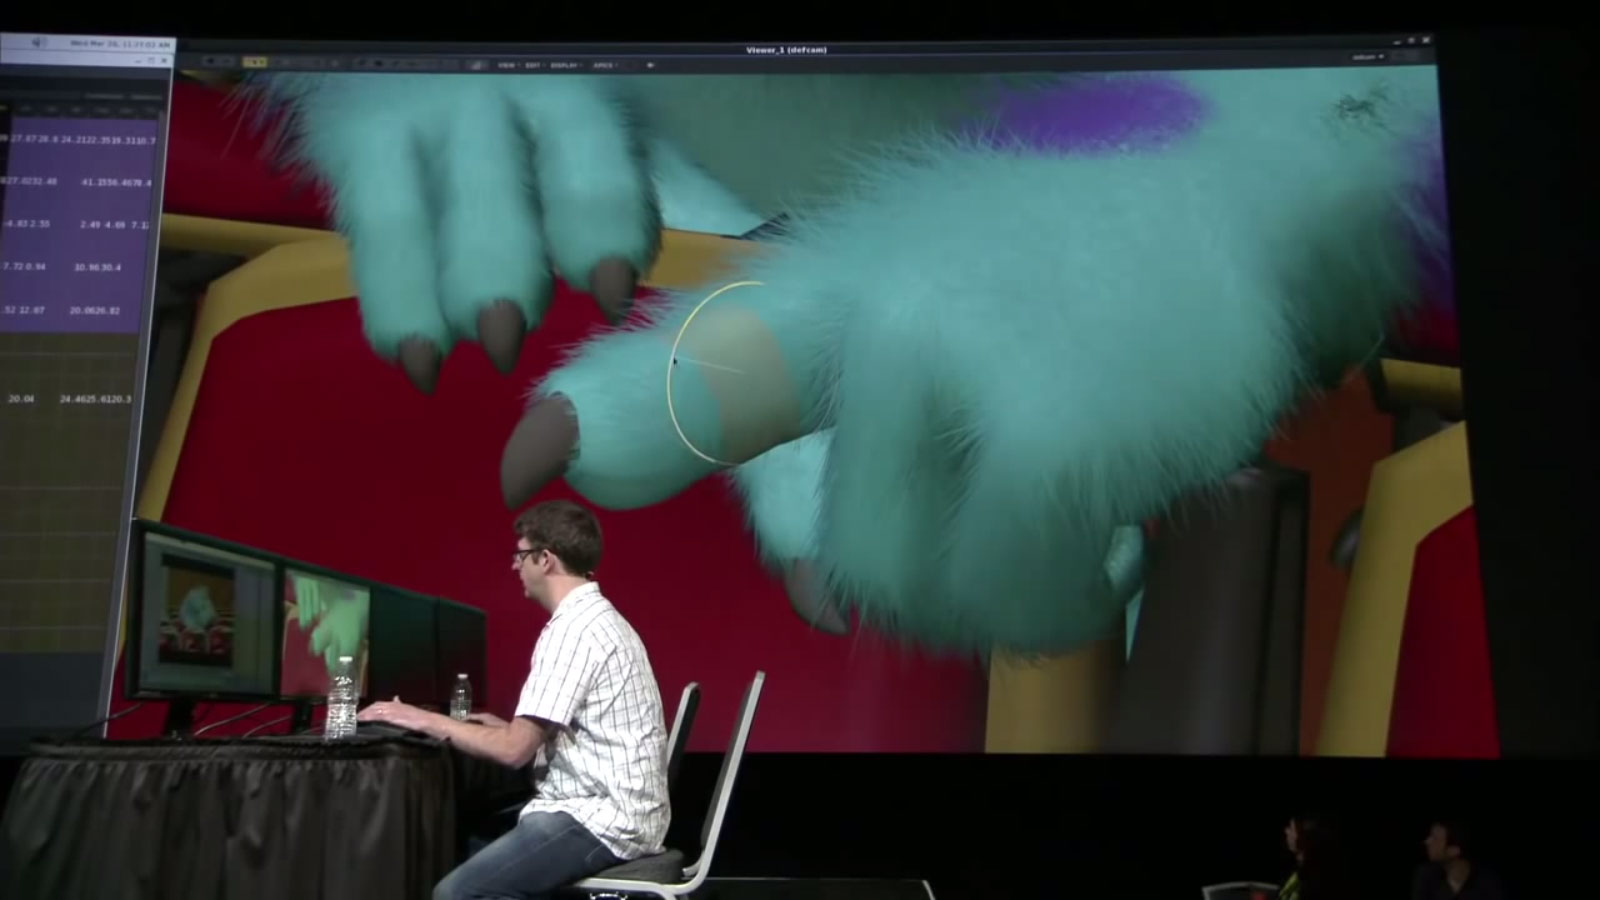 Pixar’s engineer presenting the studio’s animation tool